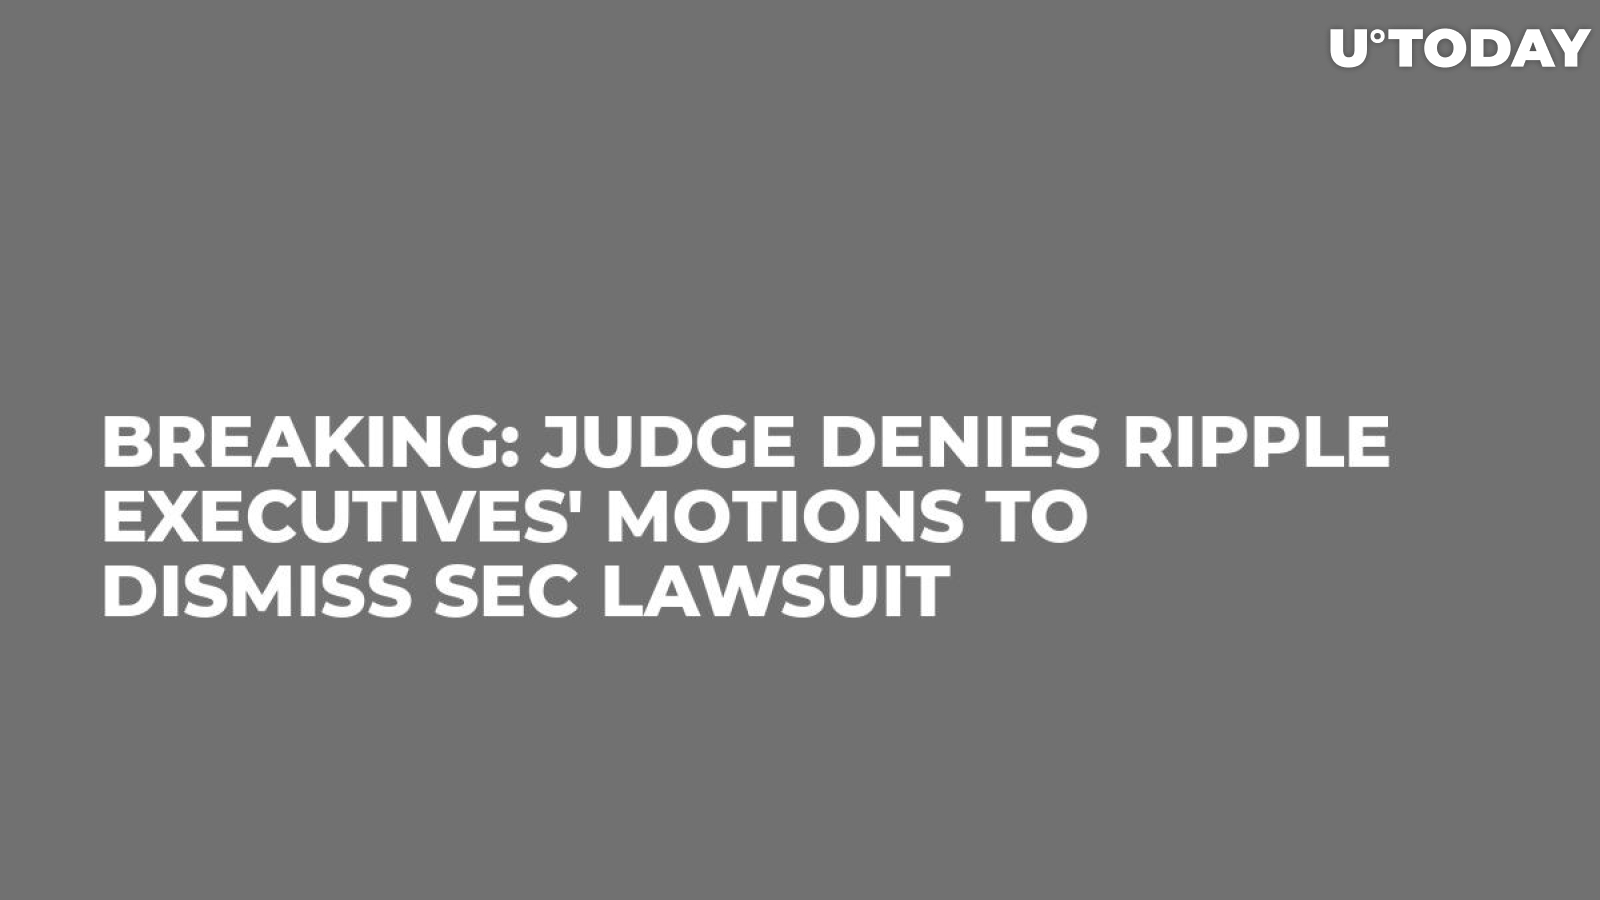 BREAKING: Judge Denies Ripple Executives' Motions to Dismiss SEC Lawsuit